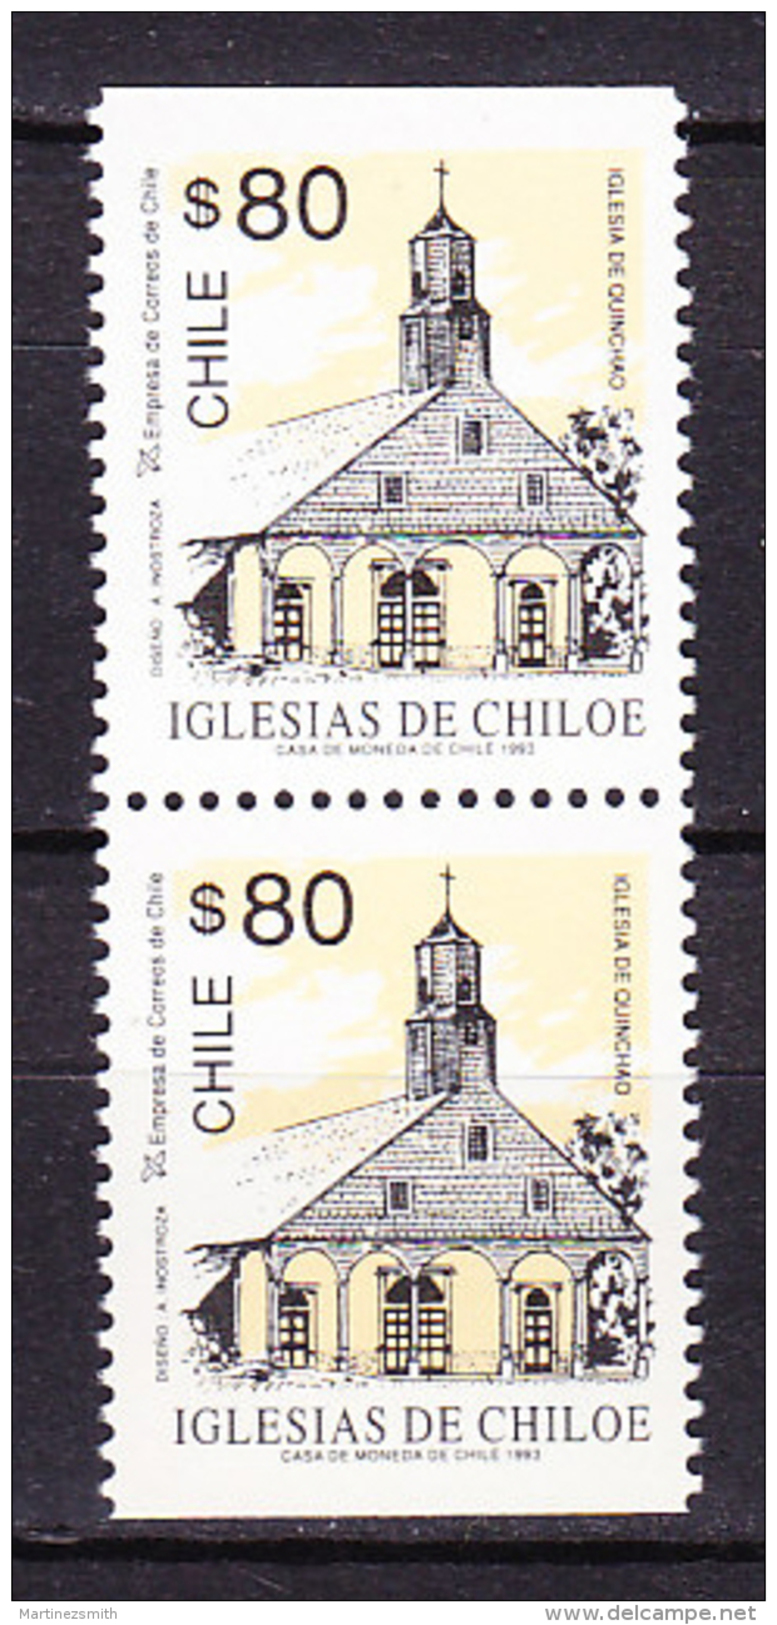 Chile - Chili 1993 Yvert 1170a, Definitve, Chilean Churches - MNH - Chili